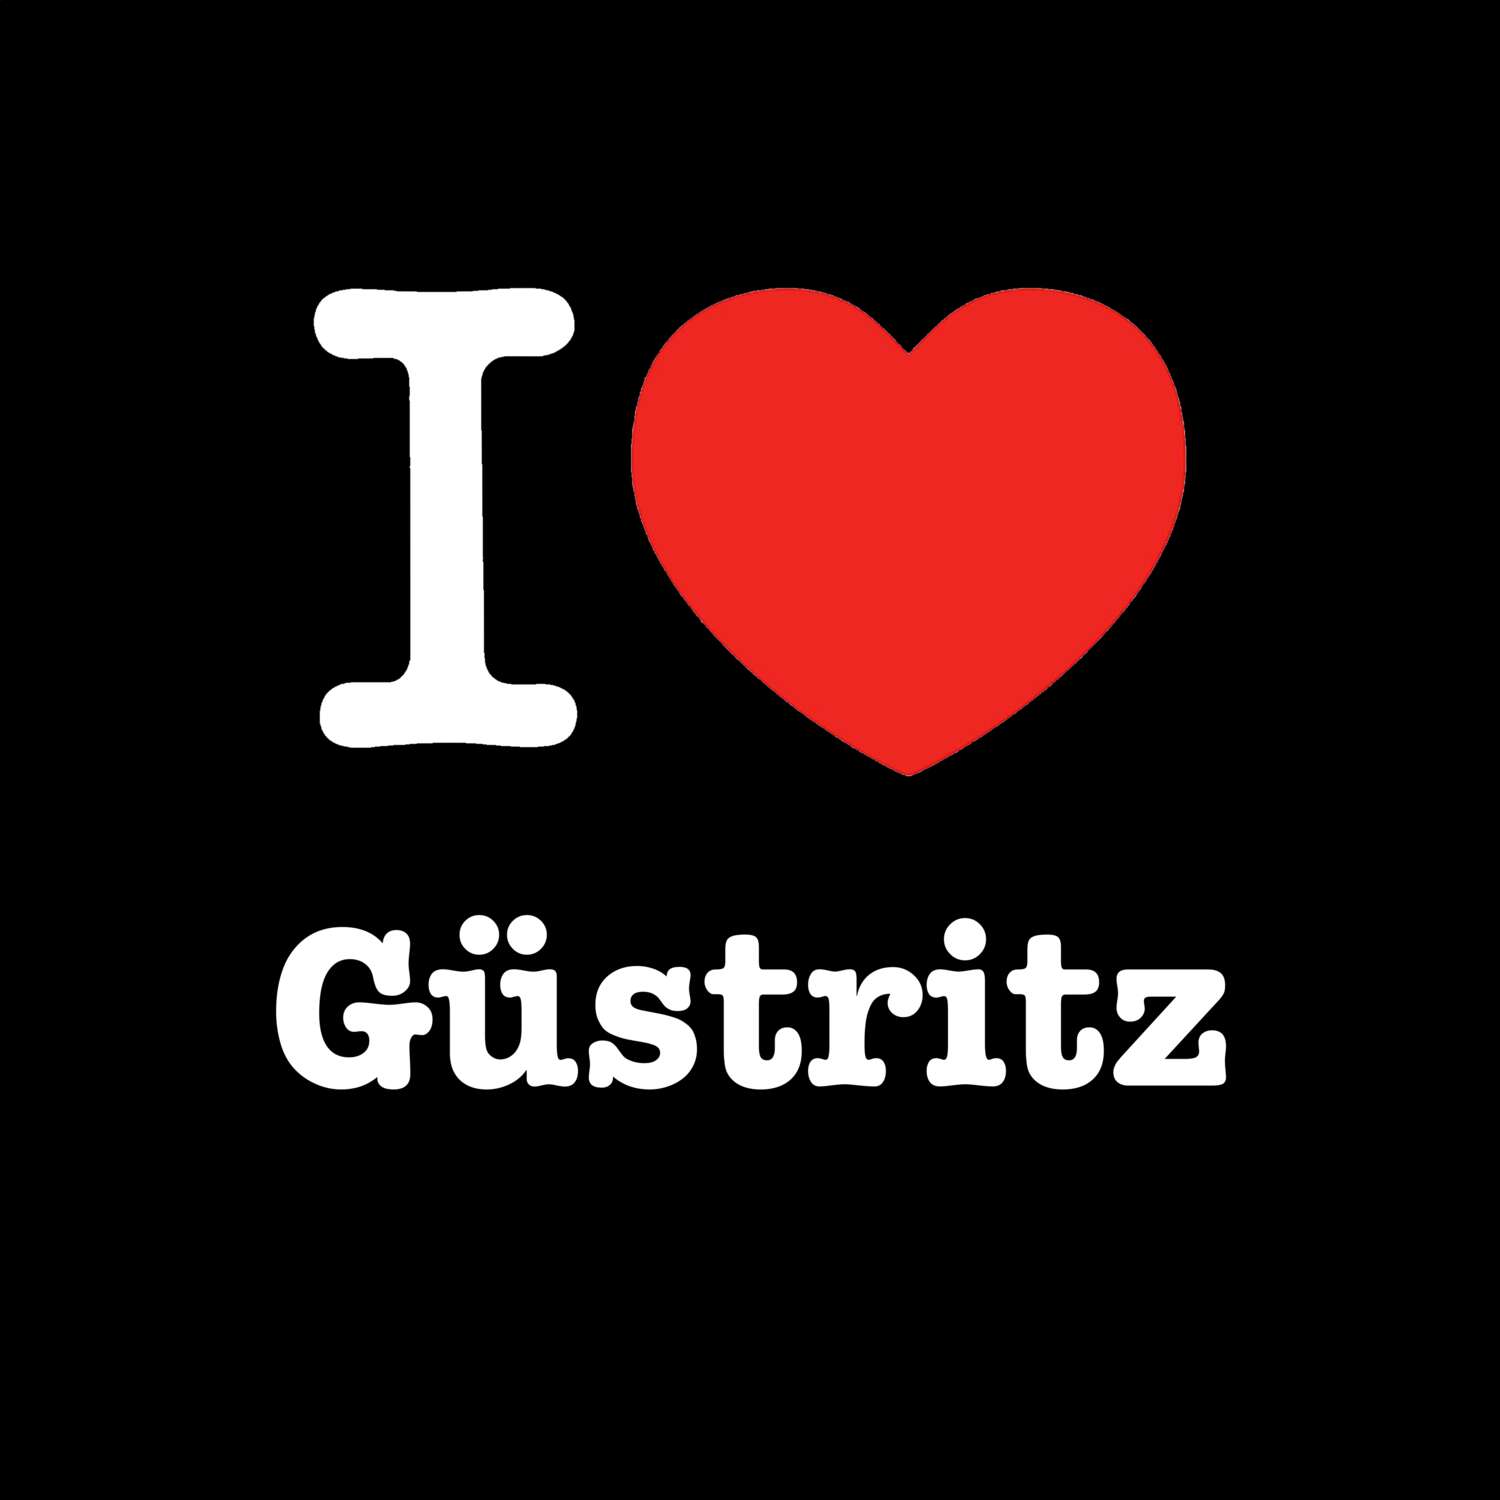 Güstritz T-Shirt »I love«